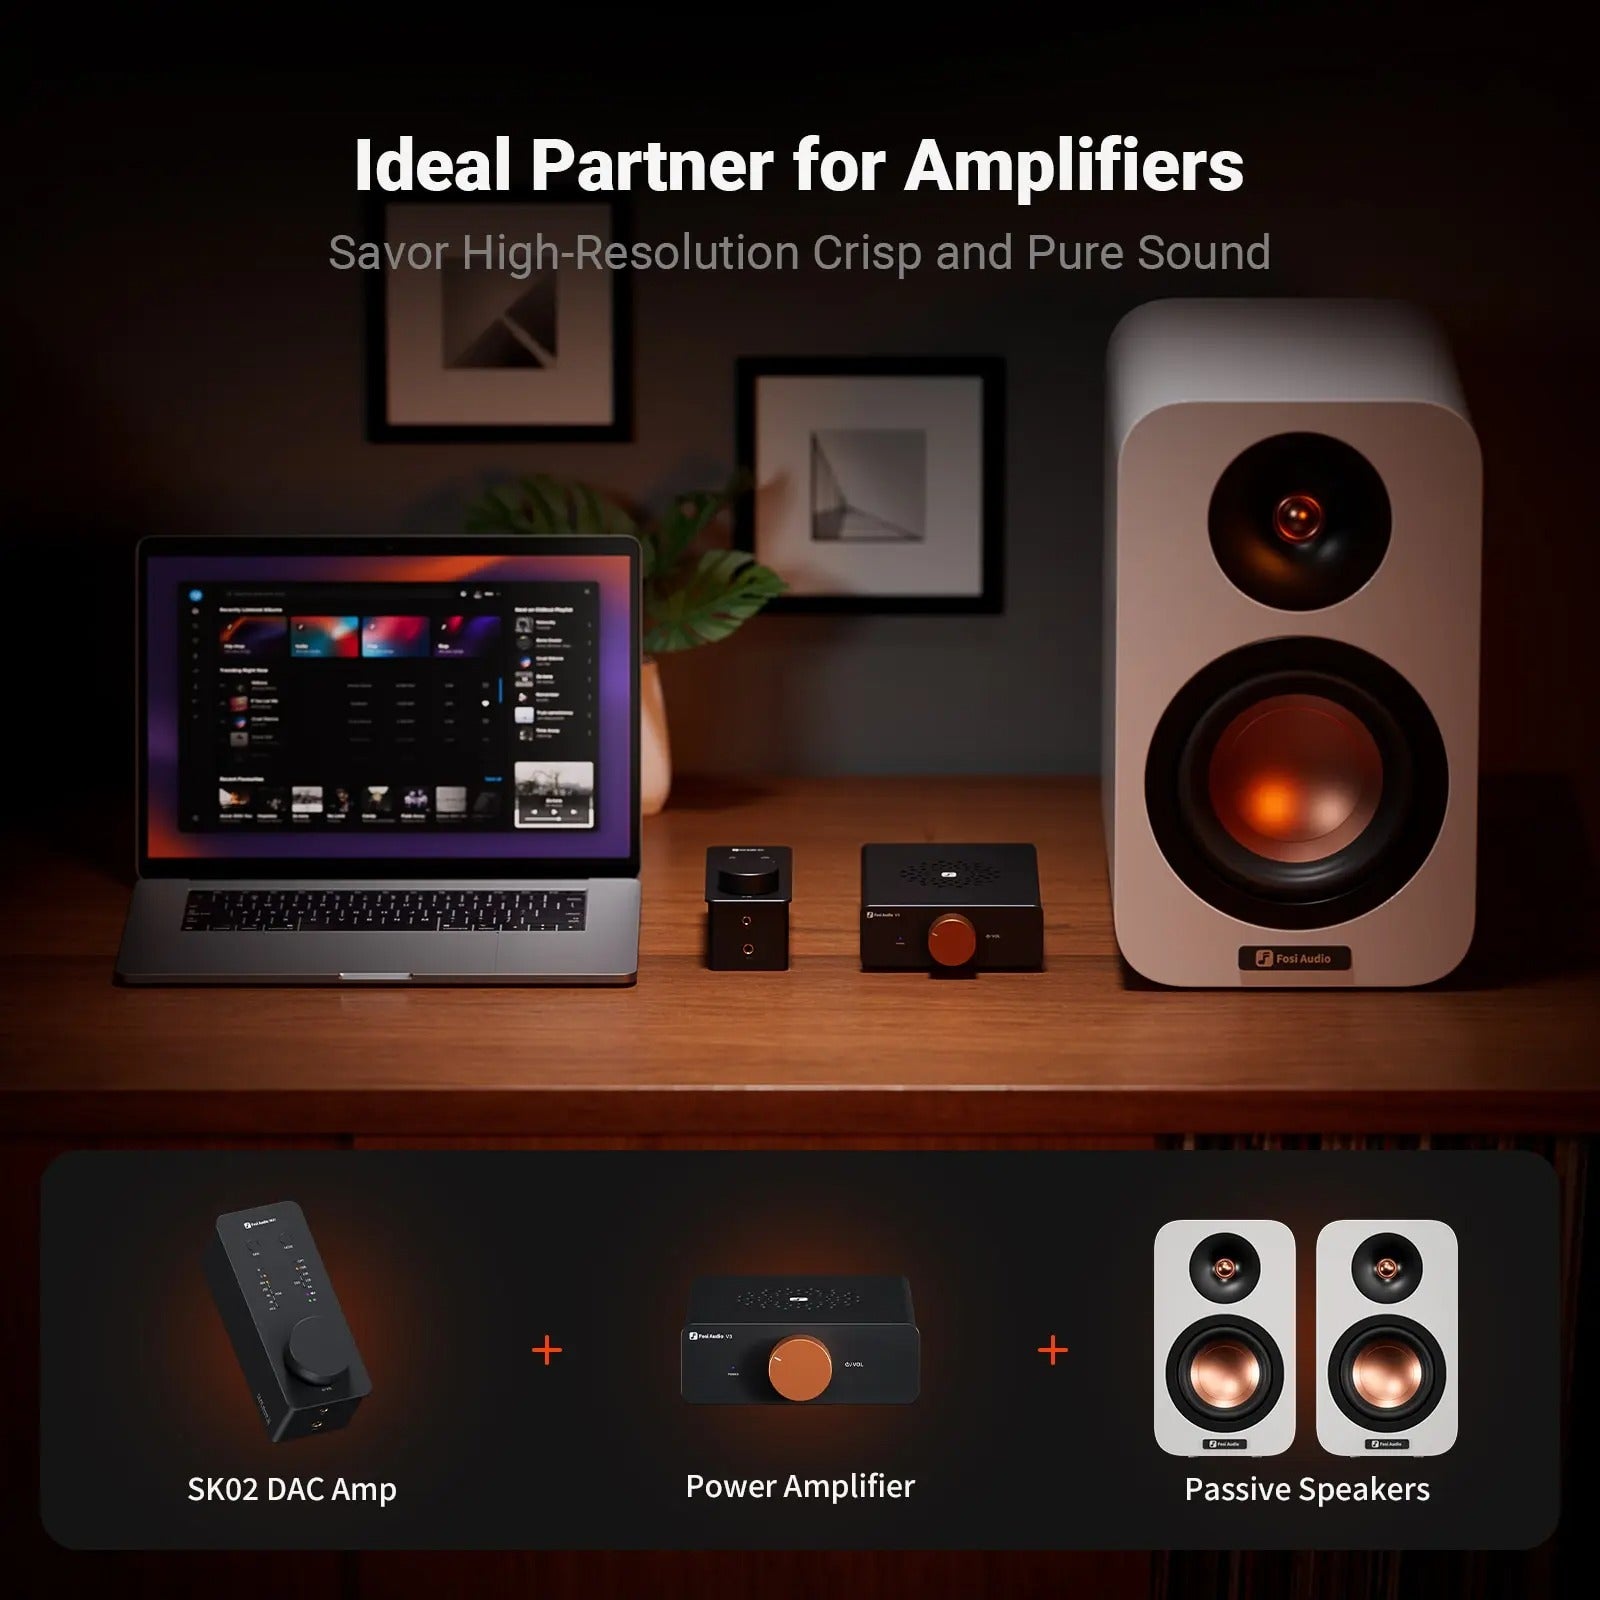 Fosi Audio SK02 Desktop DAC & Headphone Amplifier